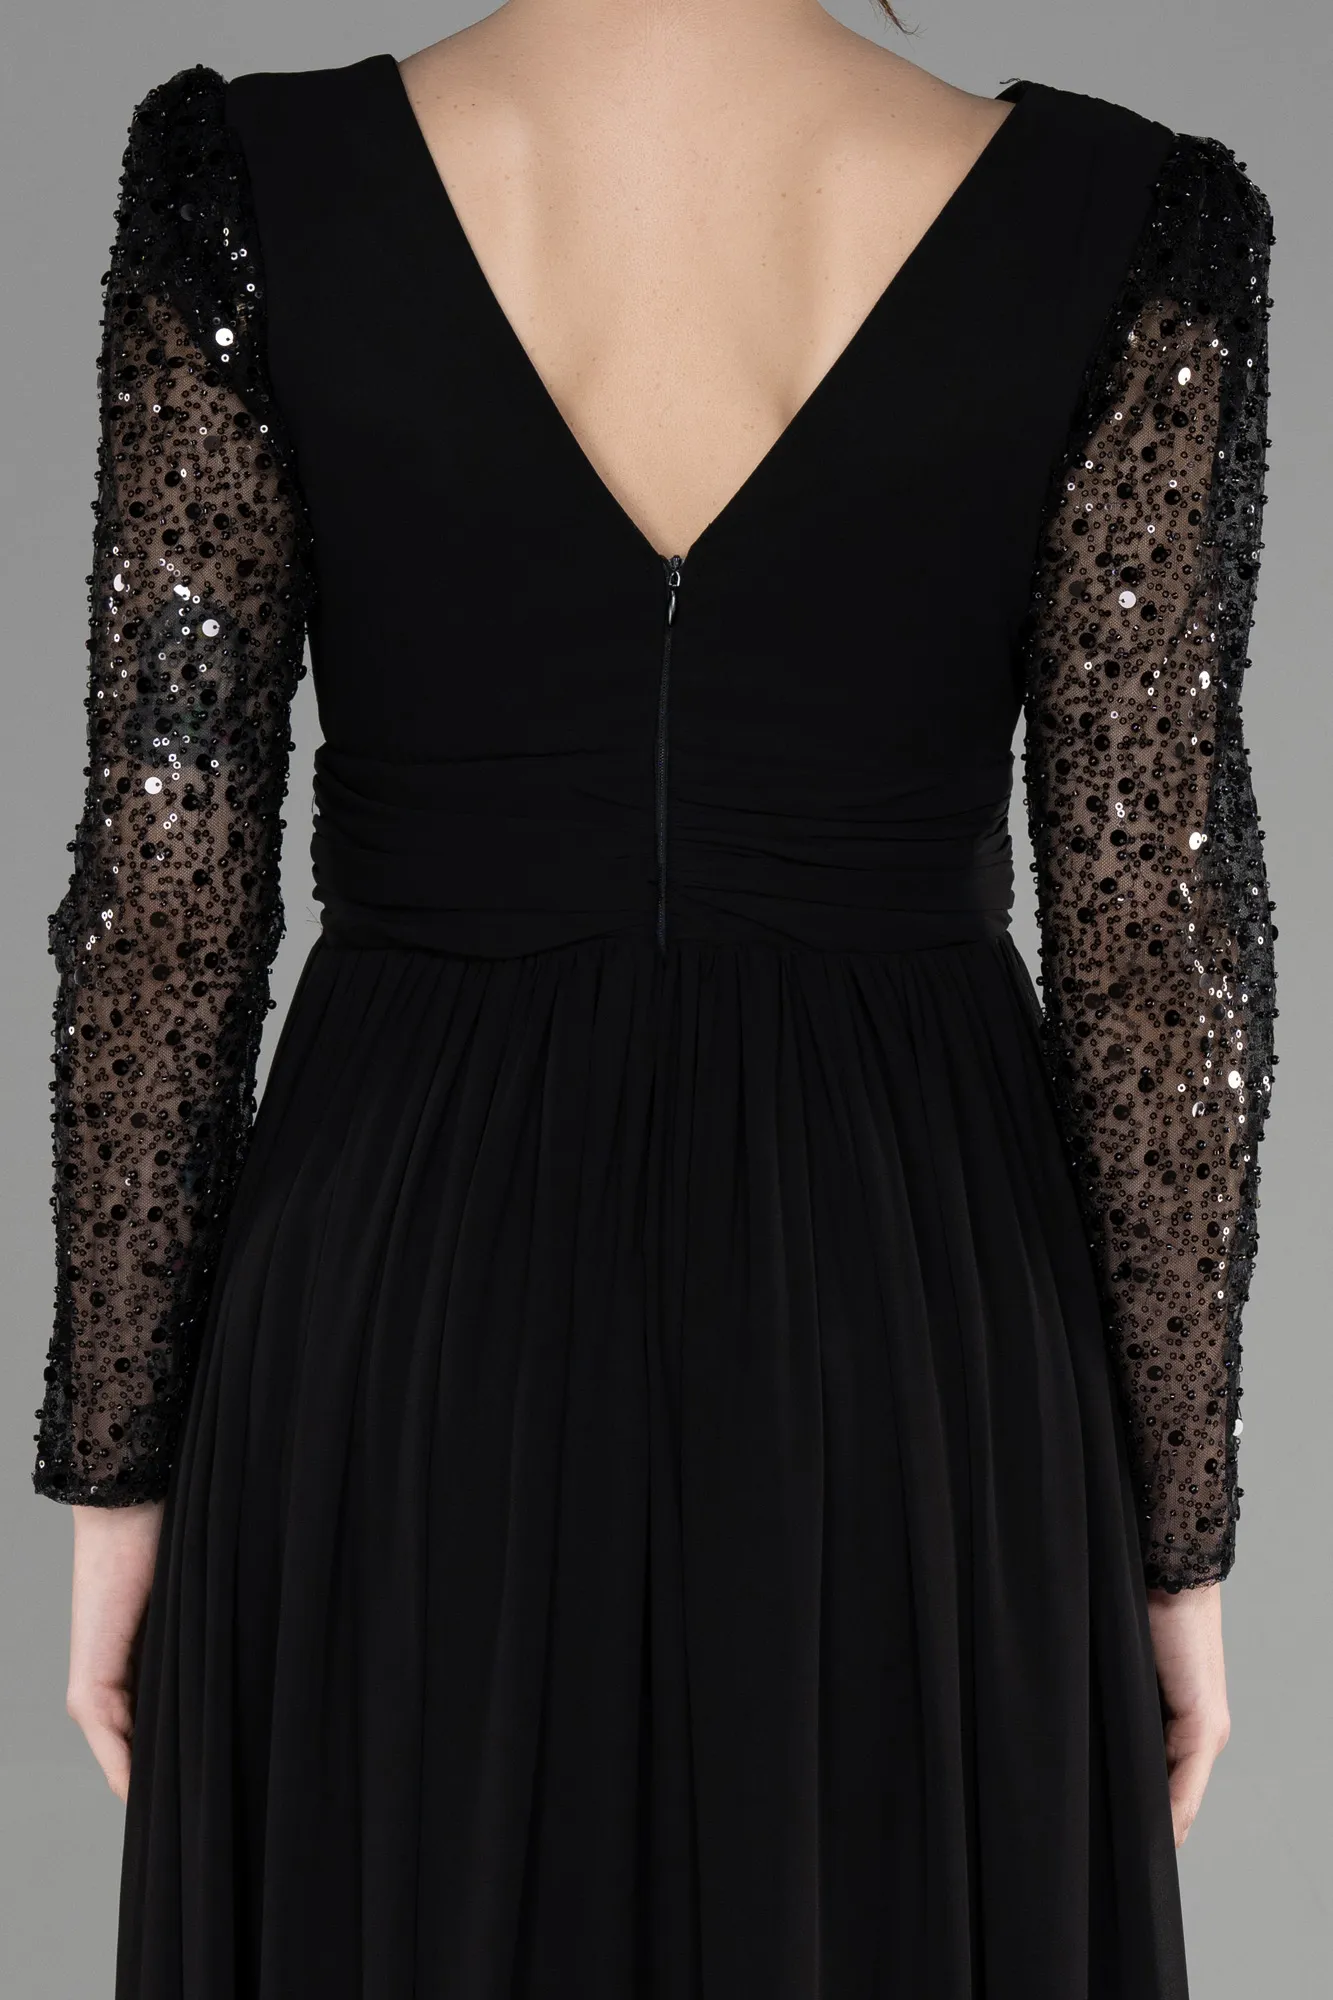 Black-Long Chiffon Evening Dress ABU3262